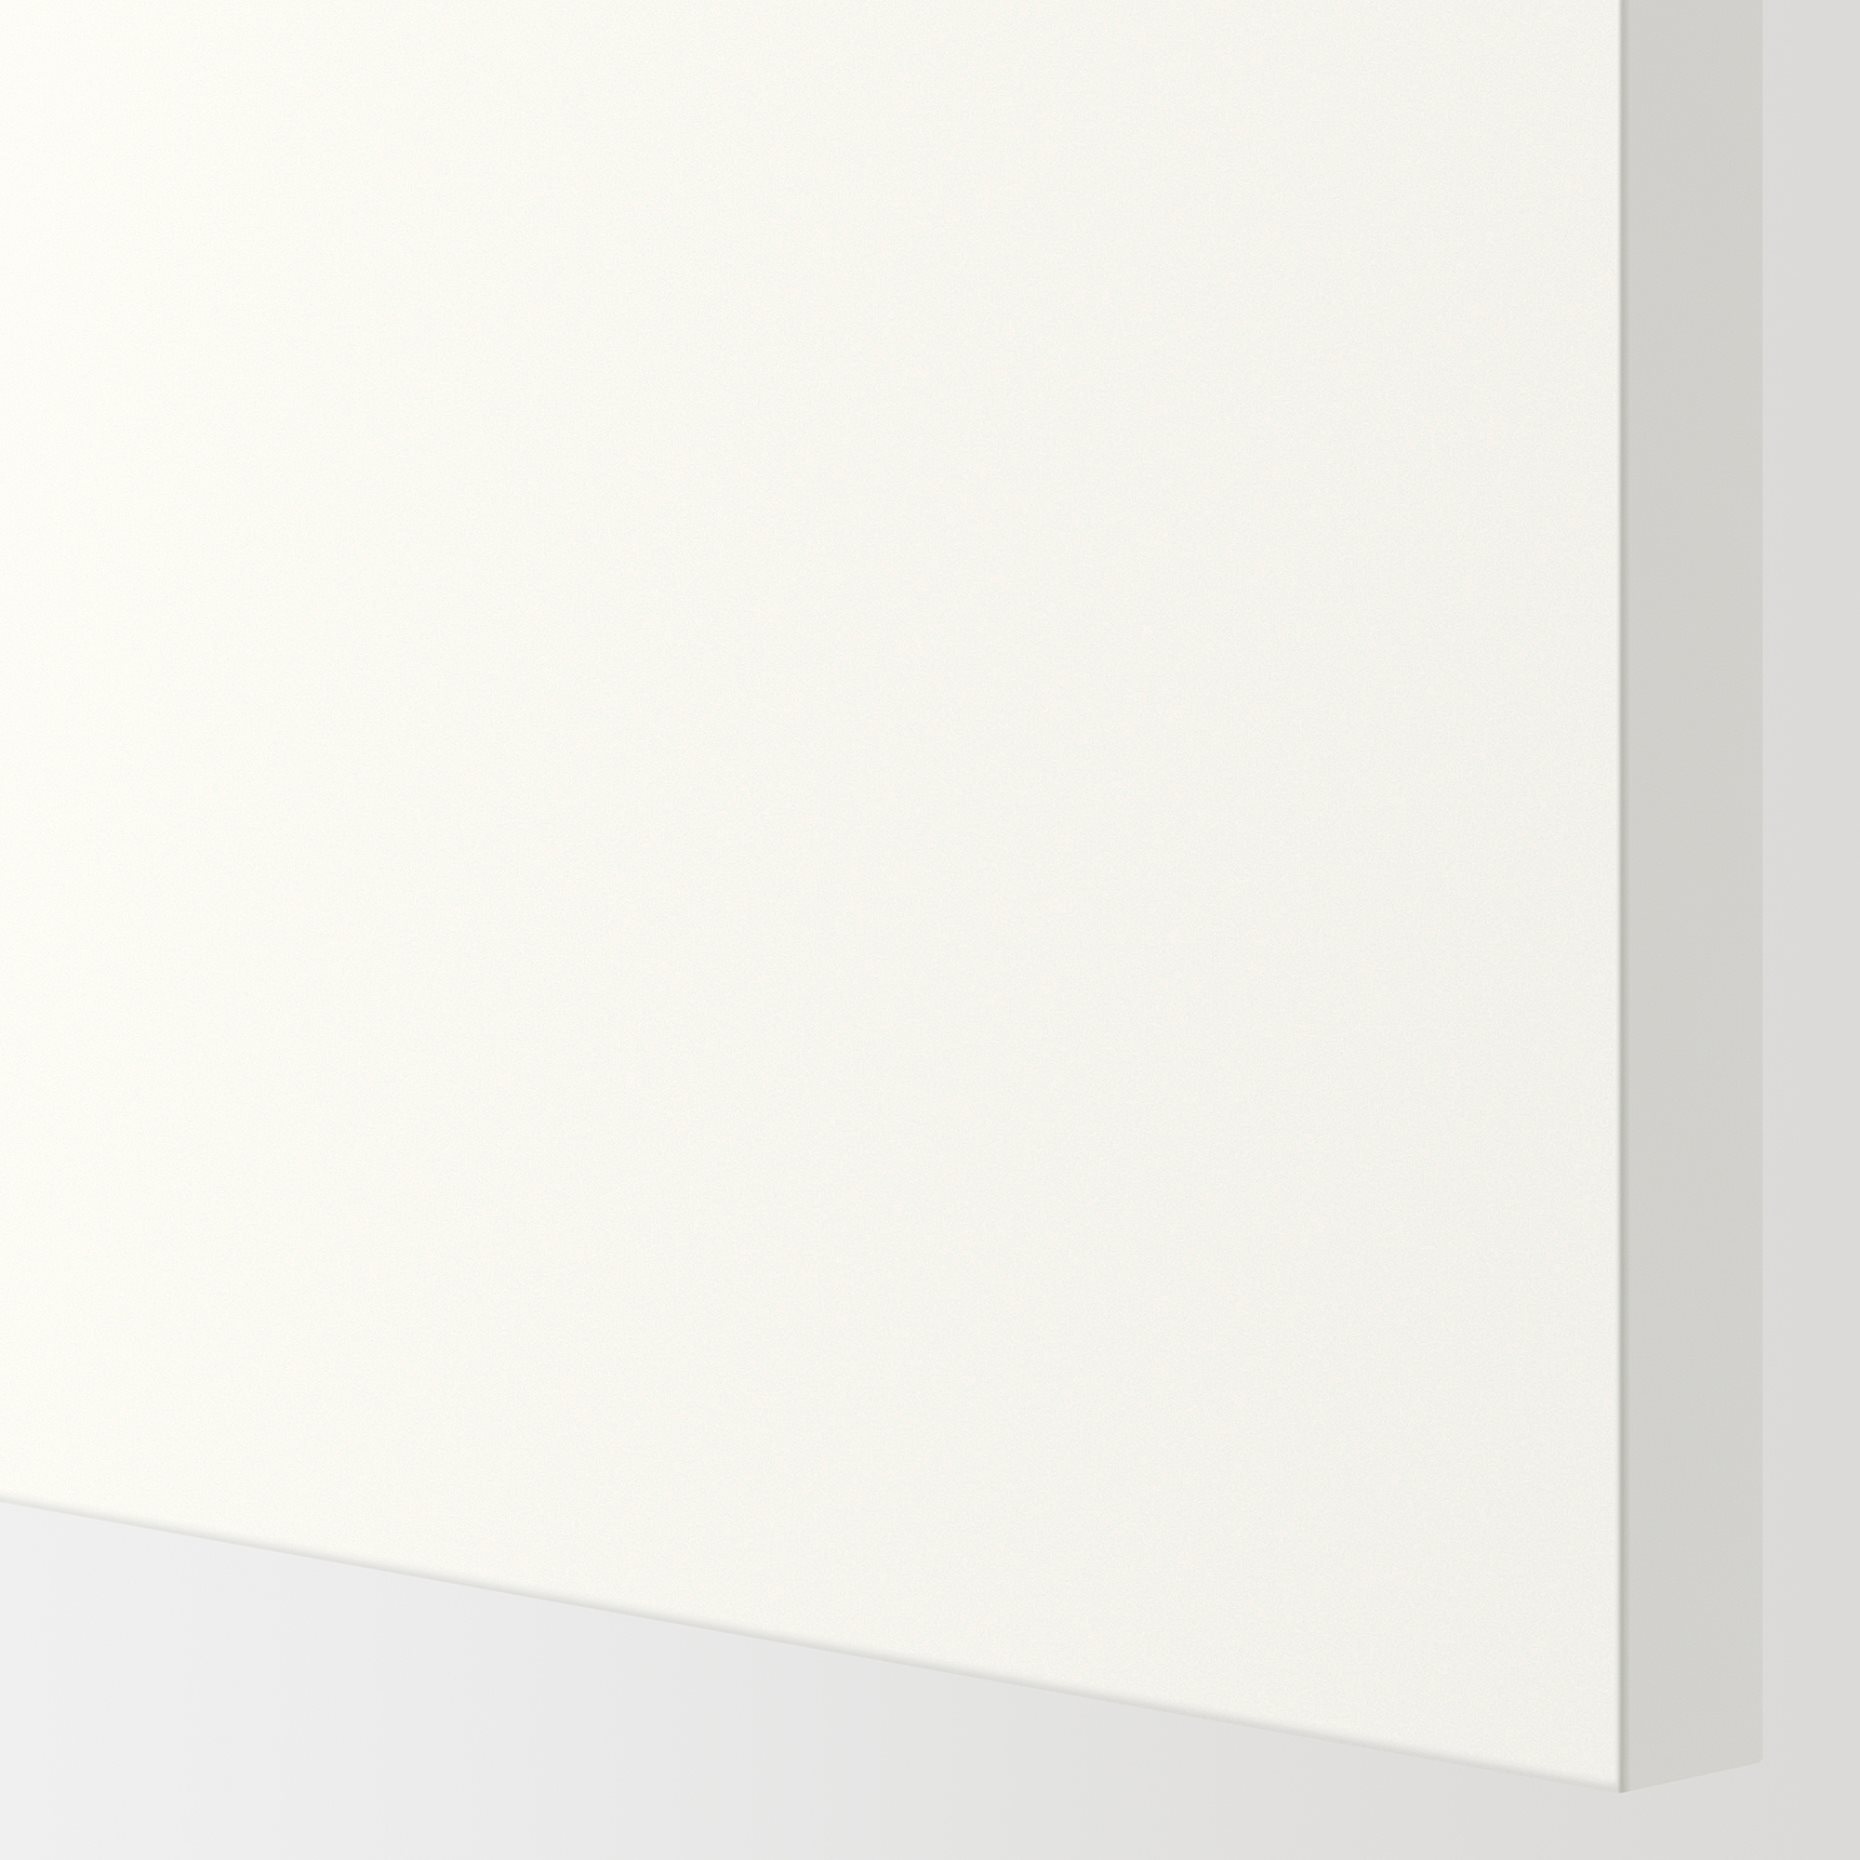 METOD, ντουλάπι βάσης με ράφια, 20x60 cm, 195.071.22